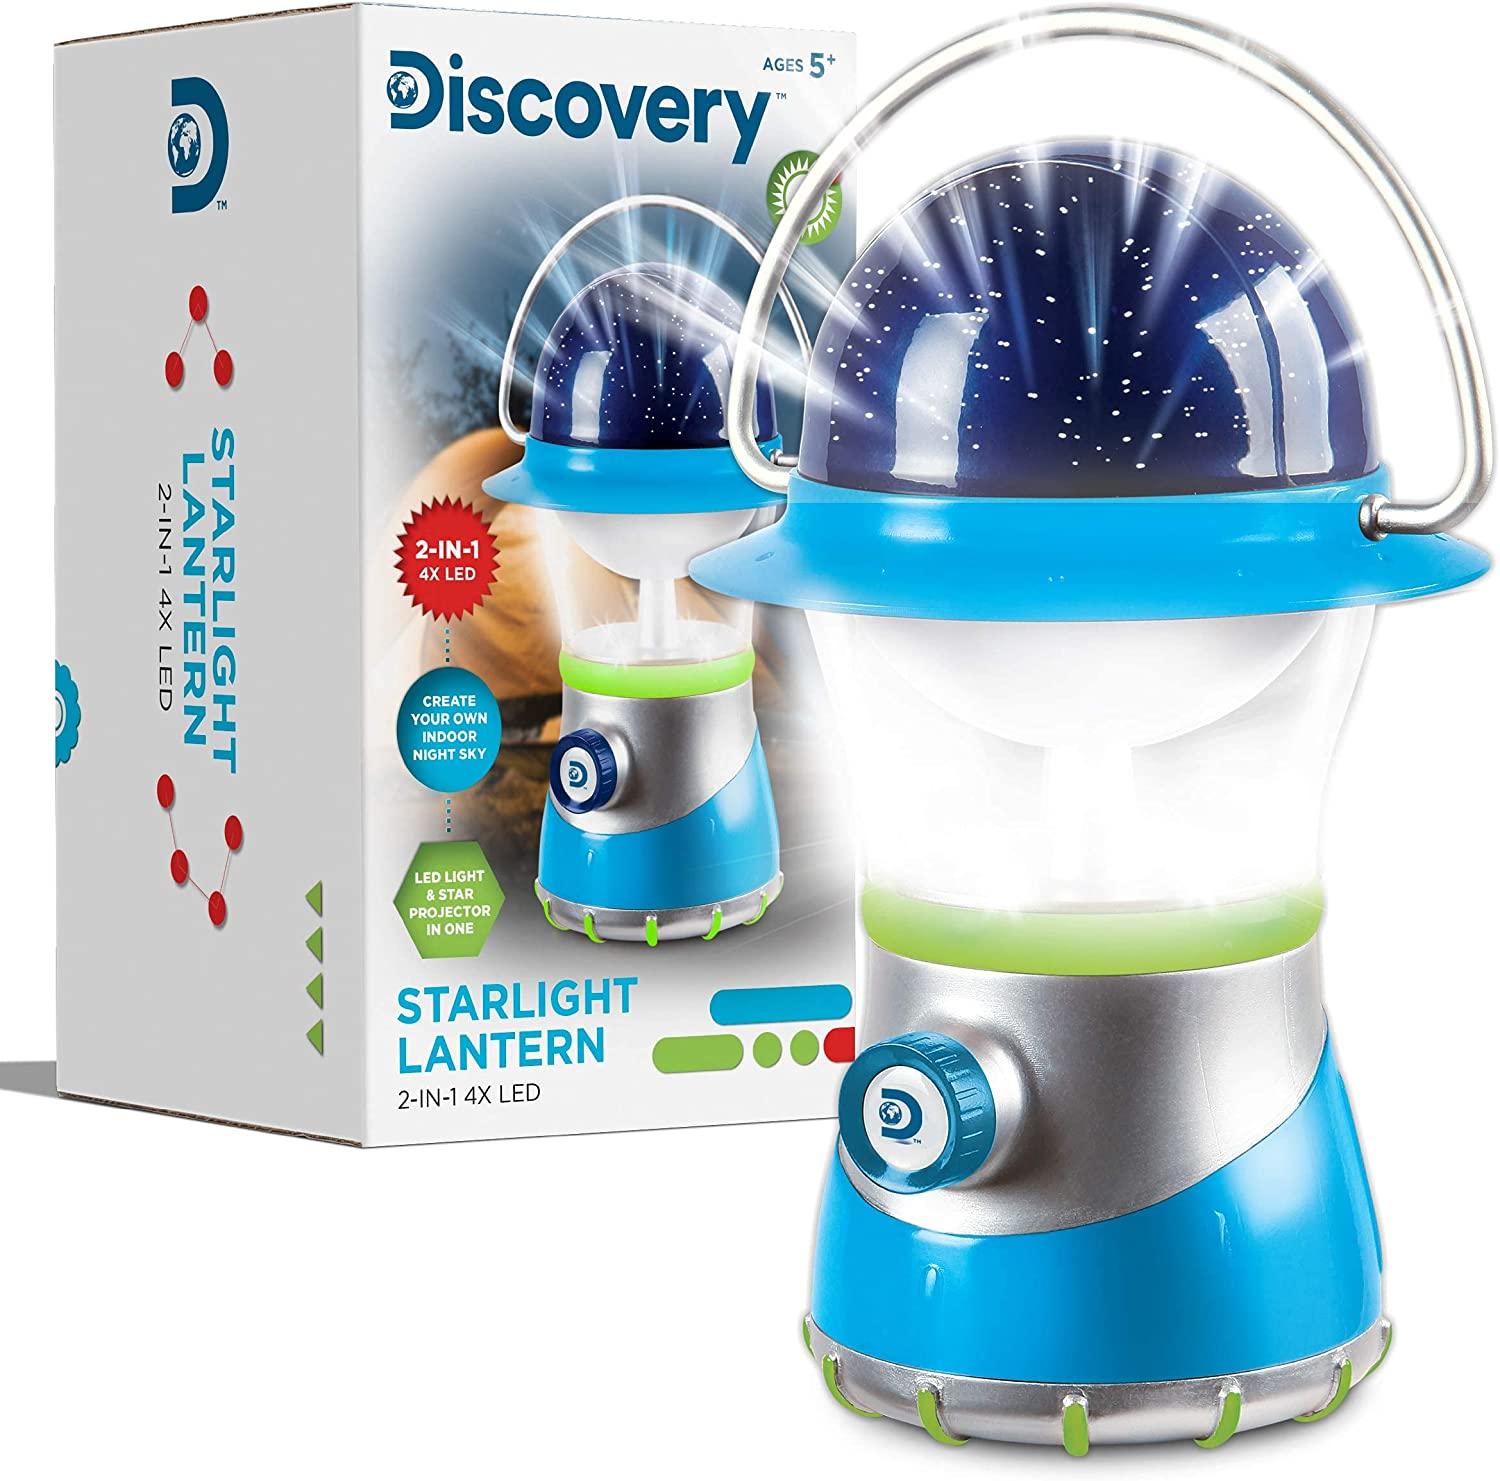 Discovery Starlight Lantern img 2